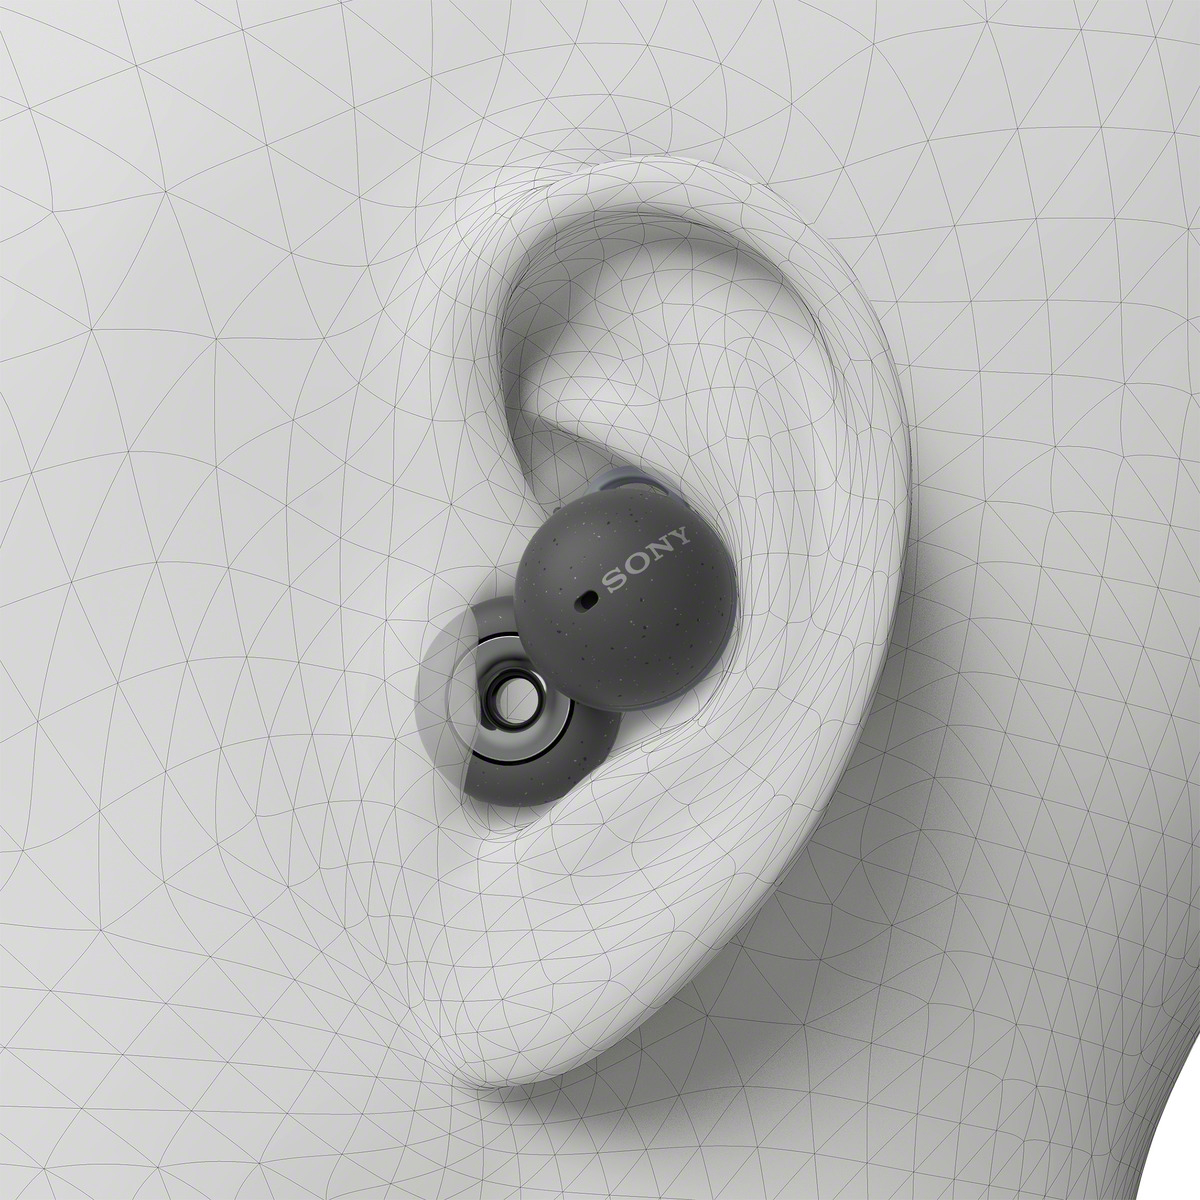 Sony wants you to wear its new LinkBuds S true wireless earbuds